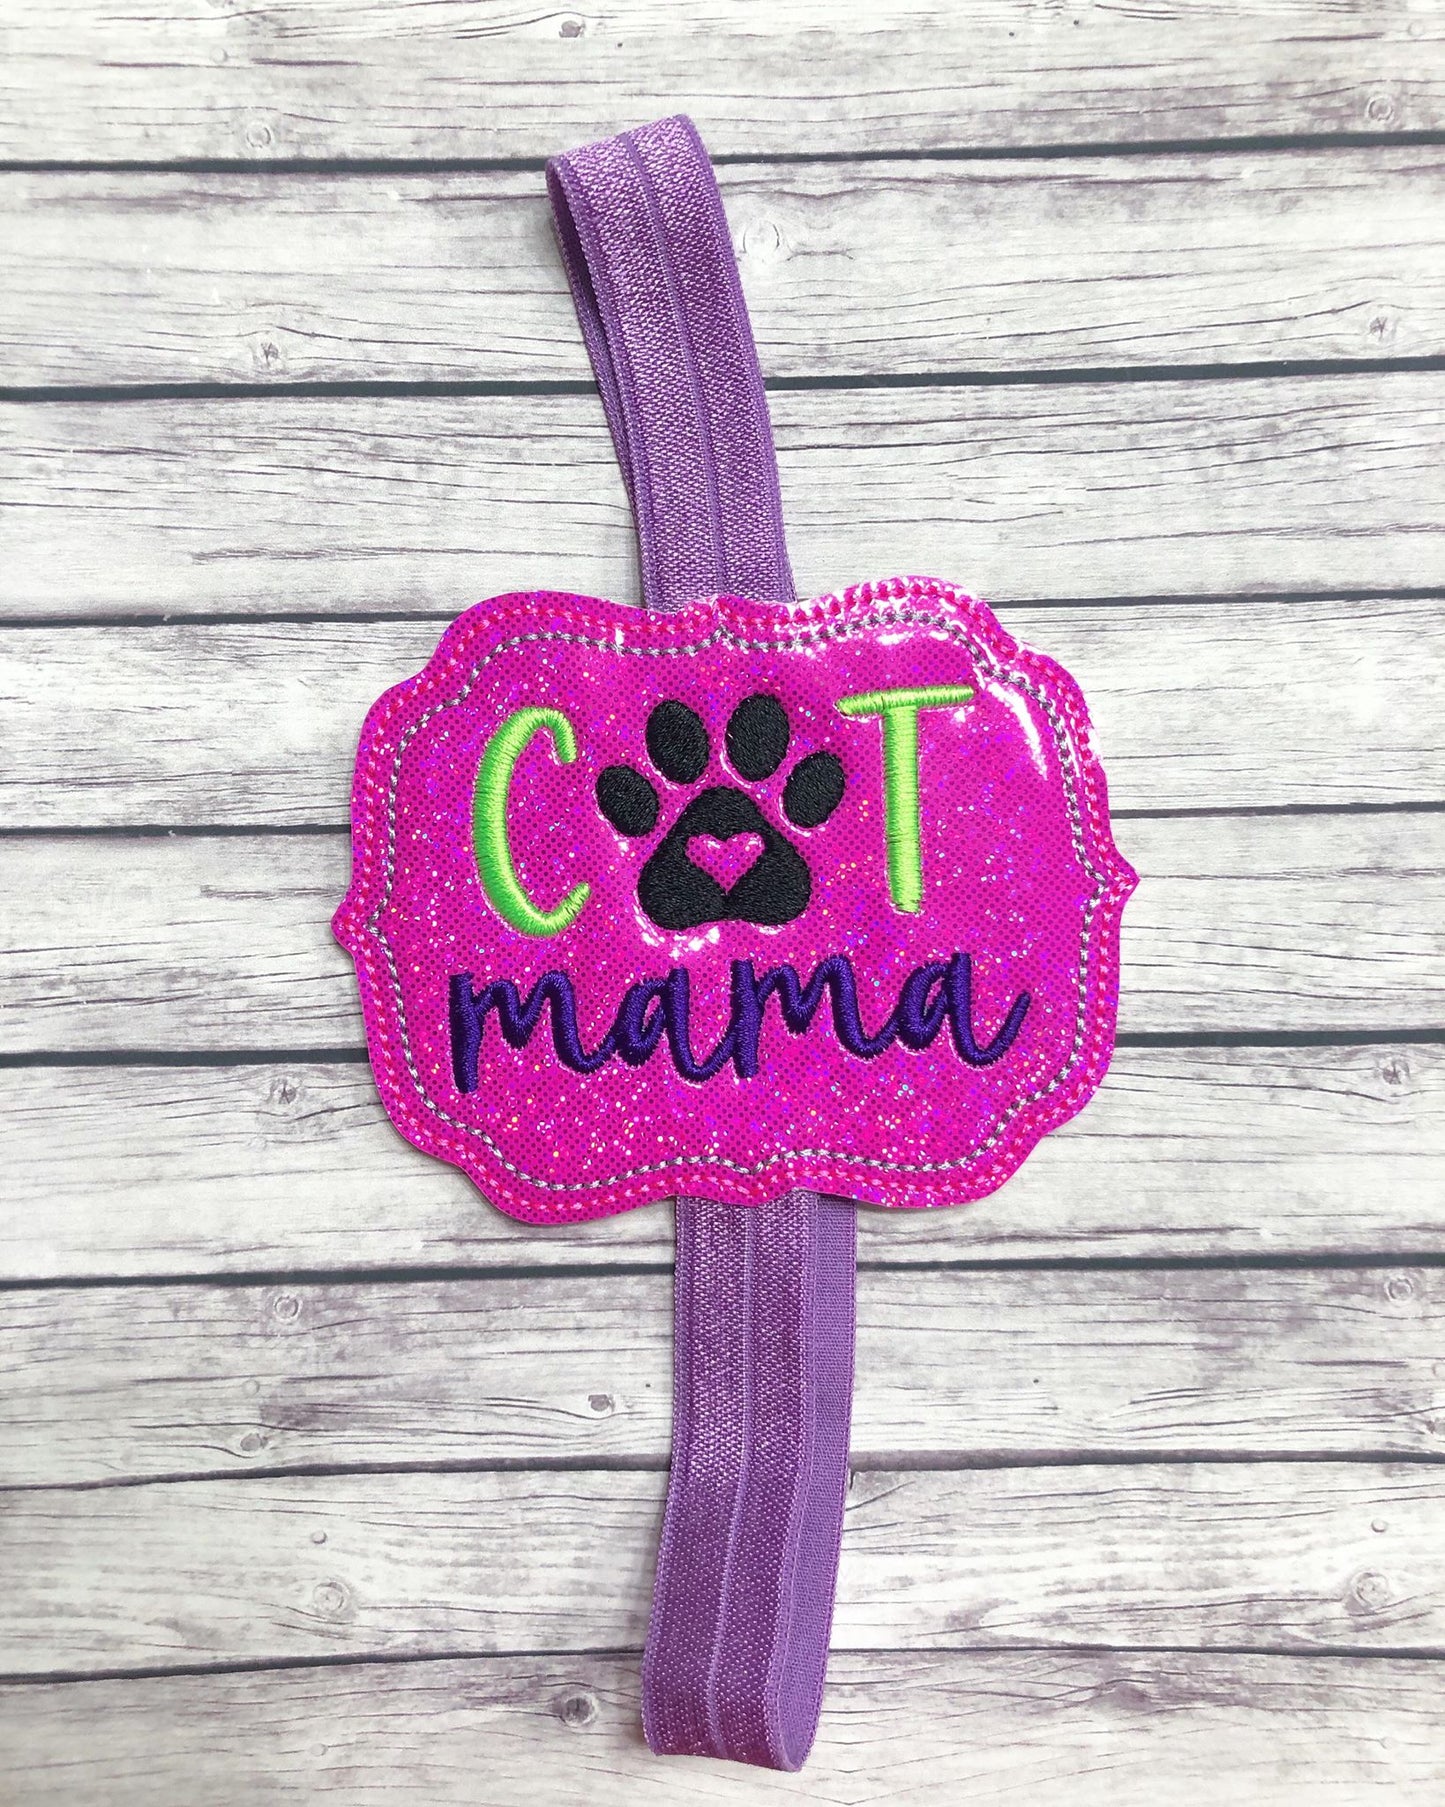 Cat Mama - Book Band - Digital Embroidery Design